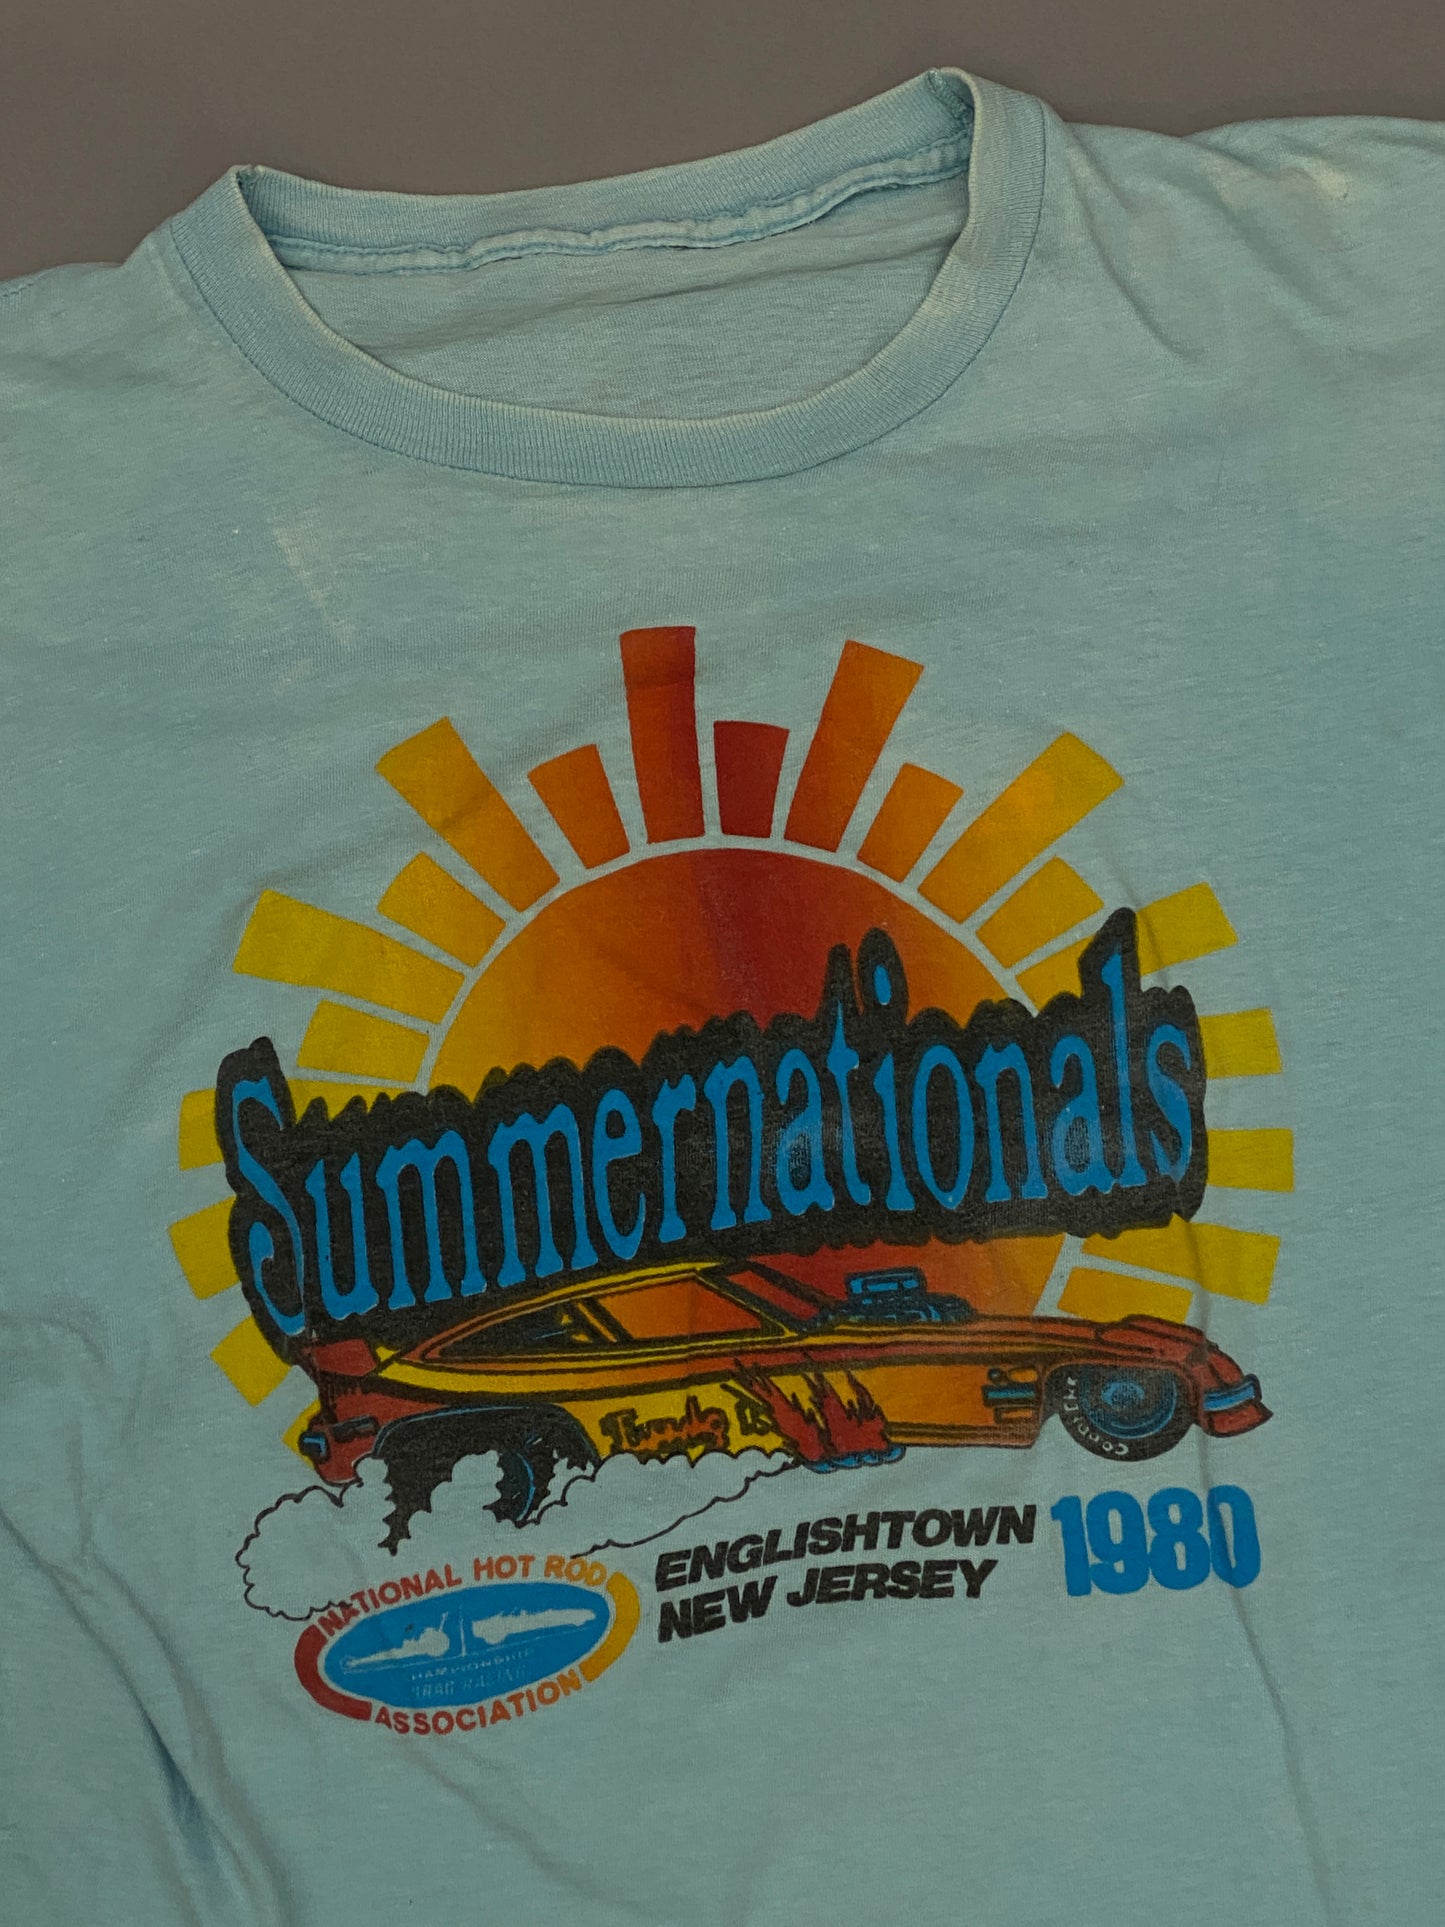 Playera Summernationals 1980